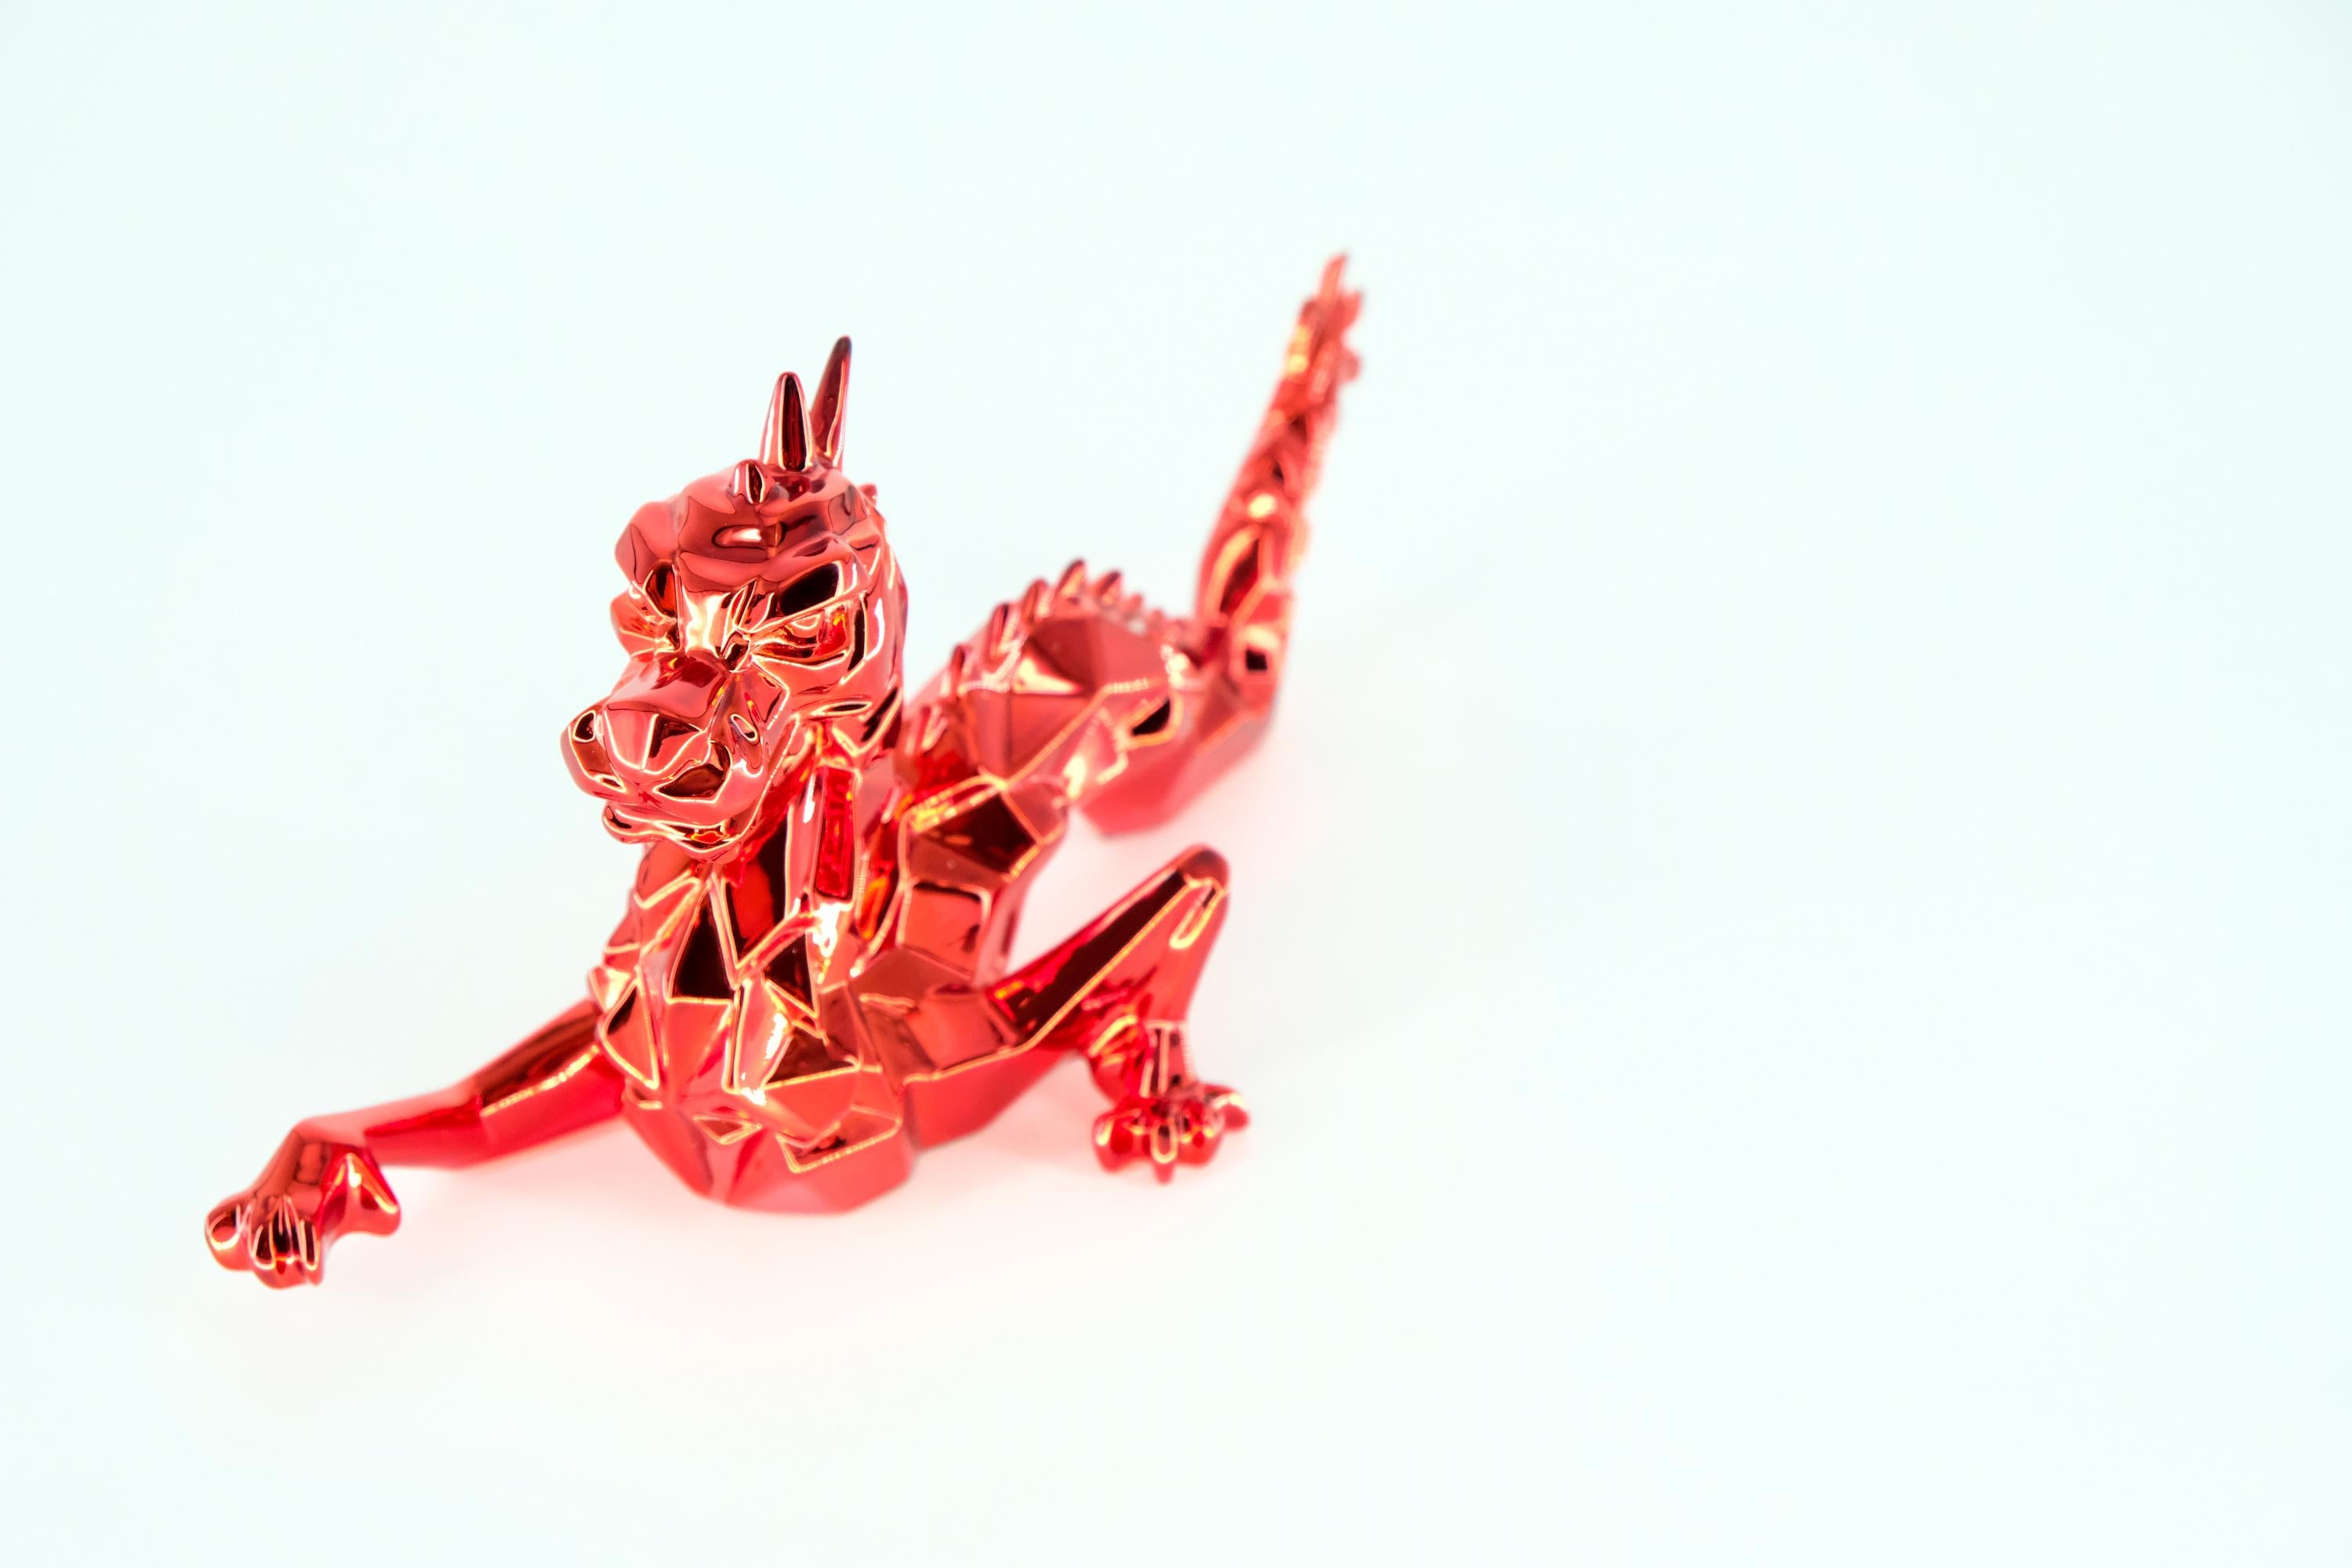 Dragon Spirit  (Red Edition) - Sculpture in original box with artist certificate